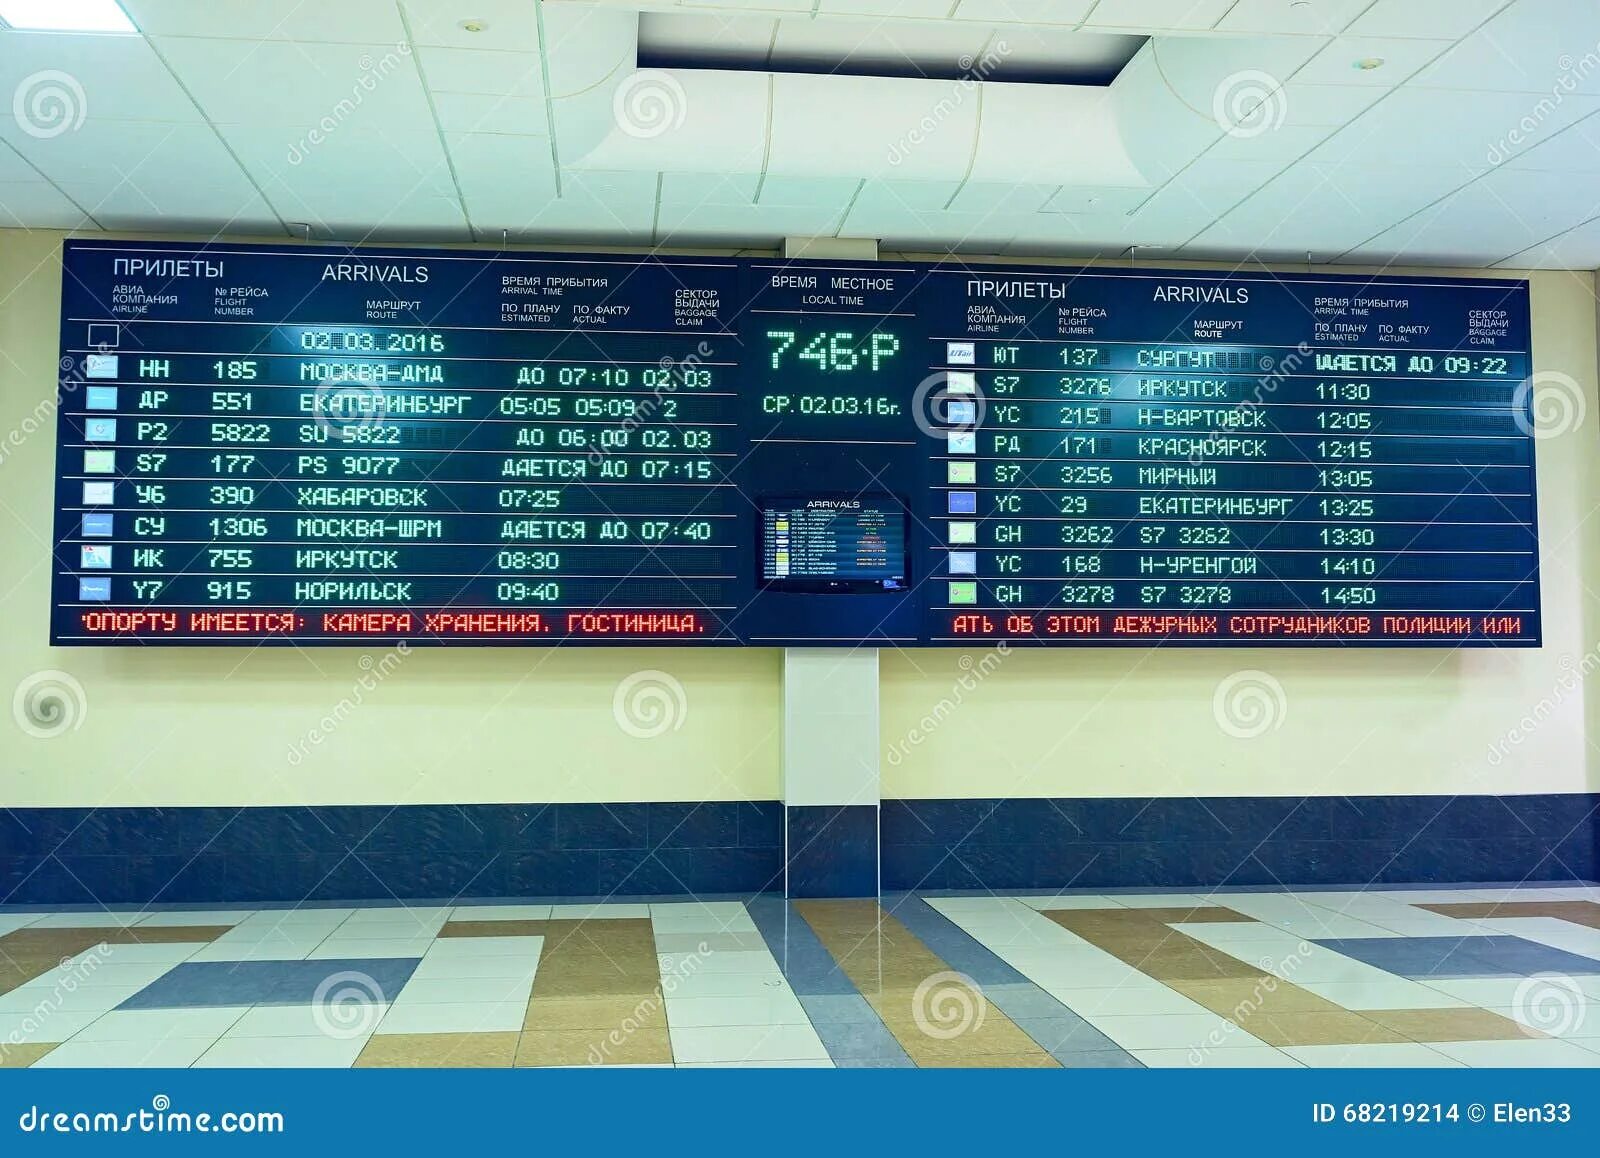 Толмачева аэропорт новосибирск билеты на автобус. Аэропорт Новосибирск расписание. Автобус вокзал аэропорт Новосибирск. Толмачёво аэропорт расписание. Автобус Новосибирск аэропорт Толмачево.